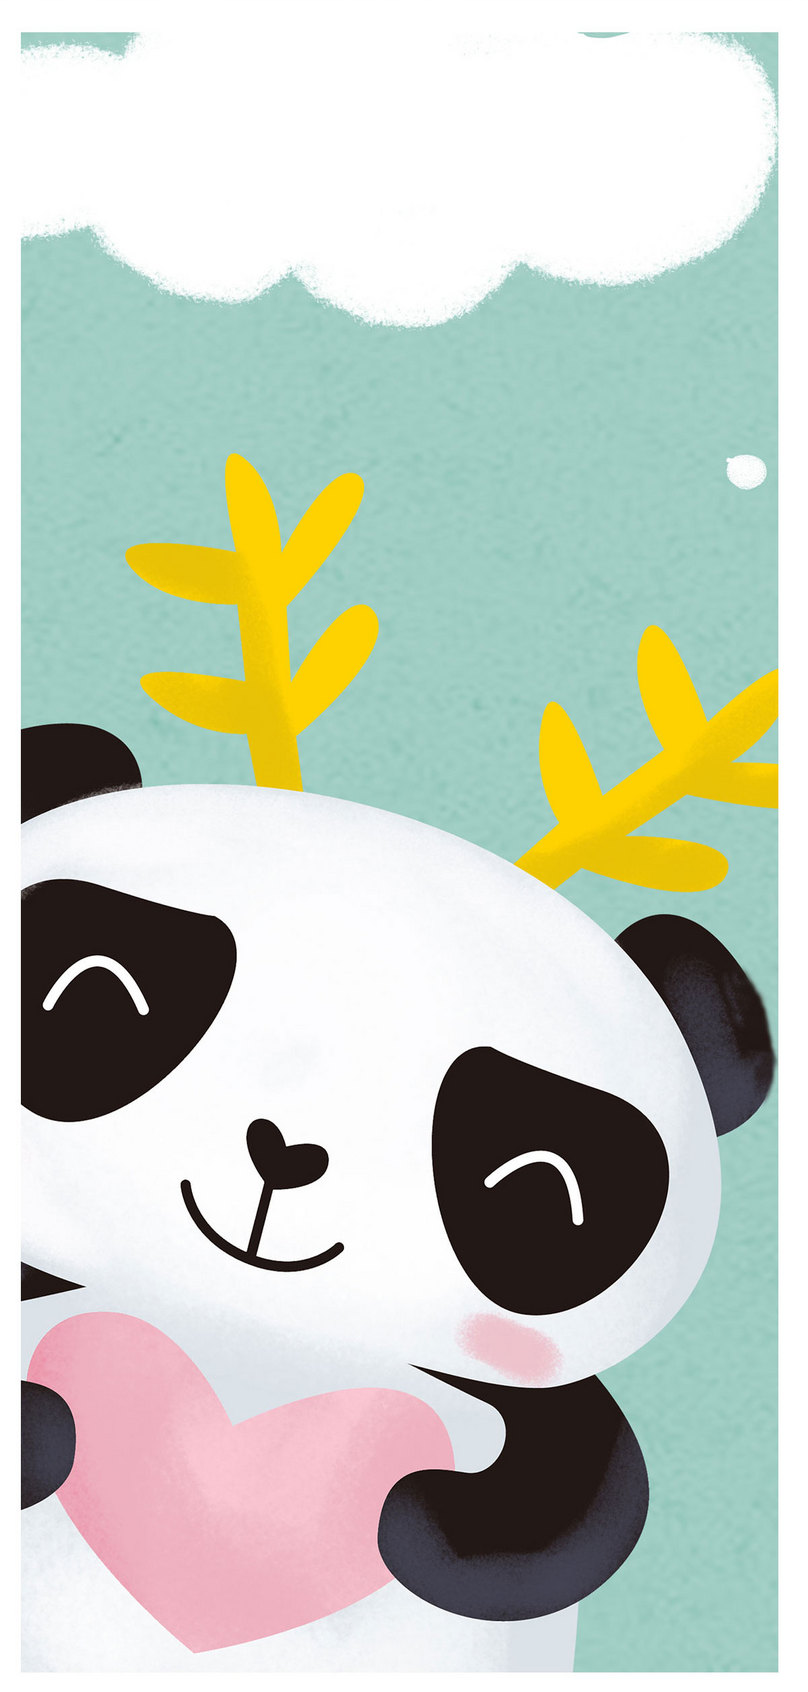 Wallpaper Ponsel Panda Lucu Gambar Unduh Gratis Latar Belakang